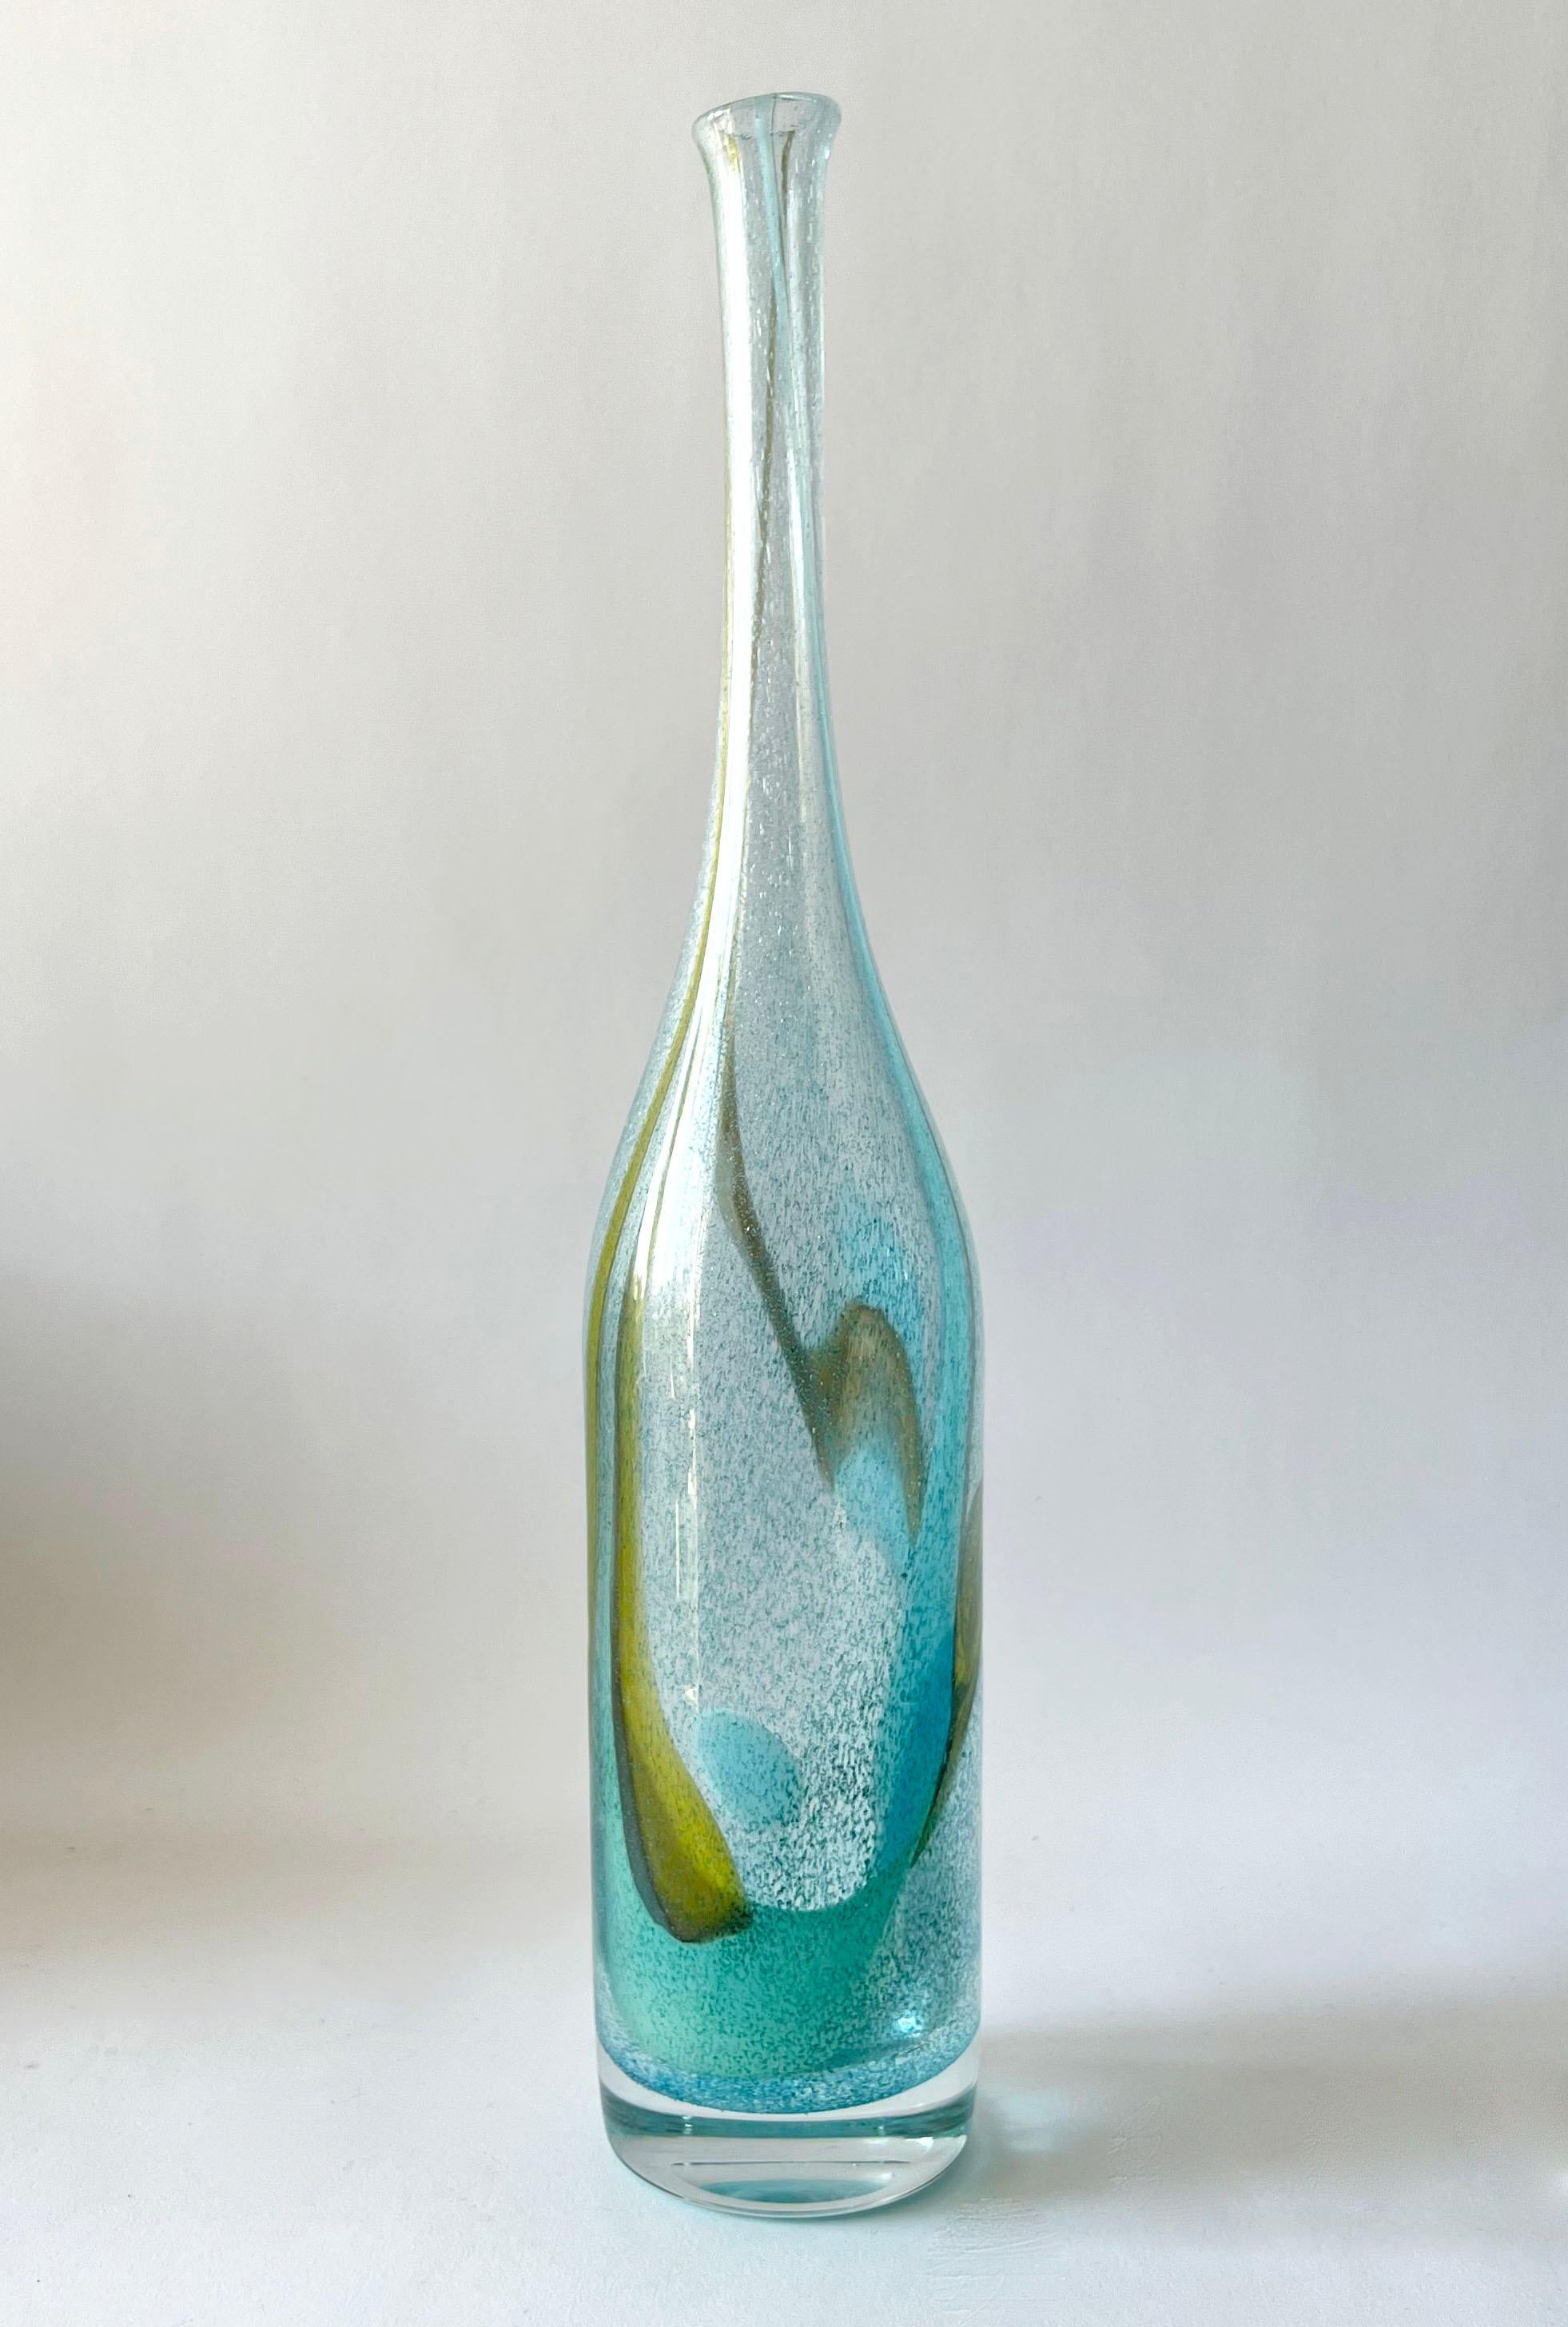 Hand blown glass bottle vase created by Bengt Orup for Johansfors, Sweden, circa 1960s. Piece measures 16